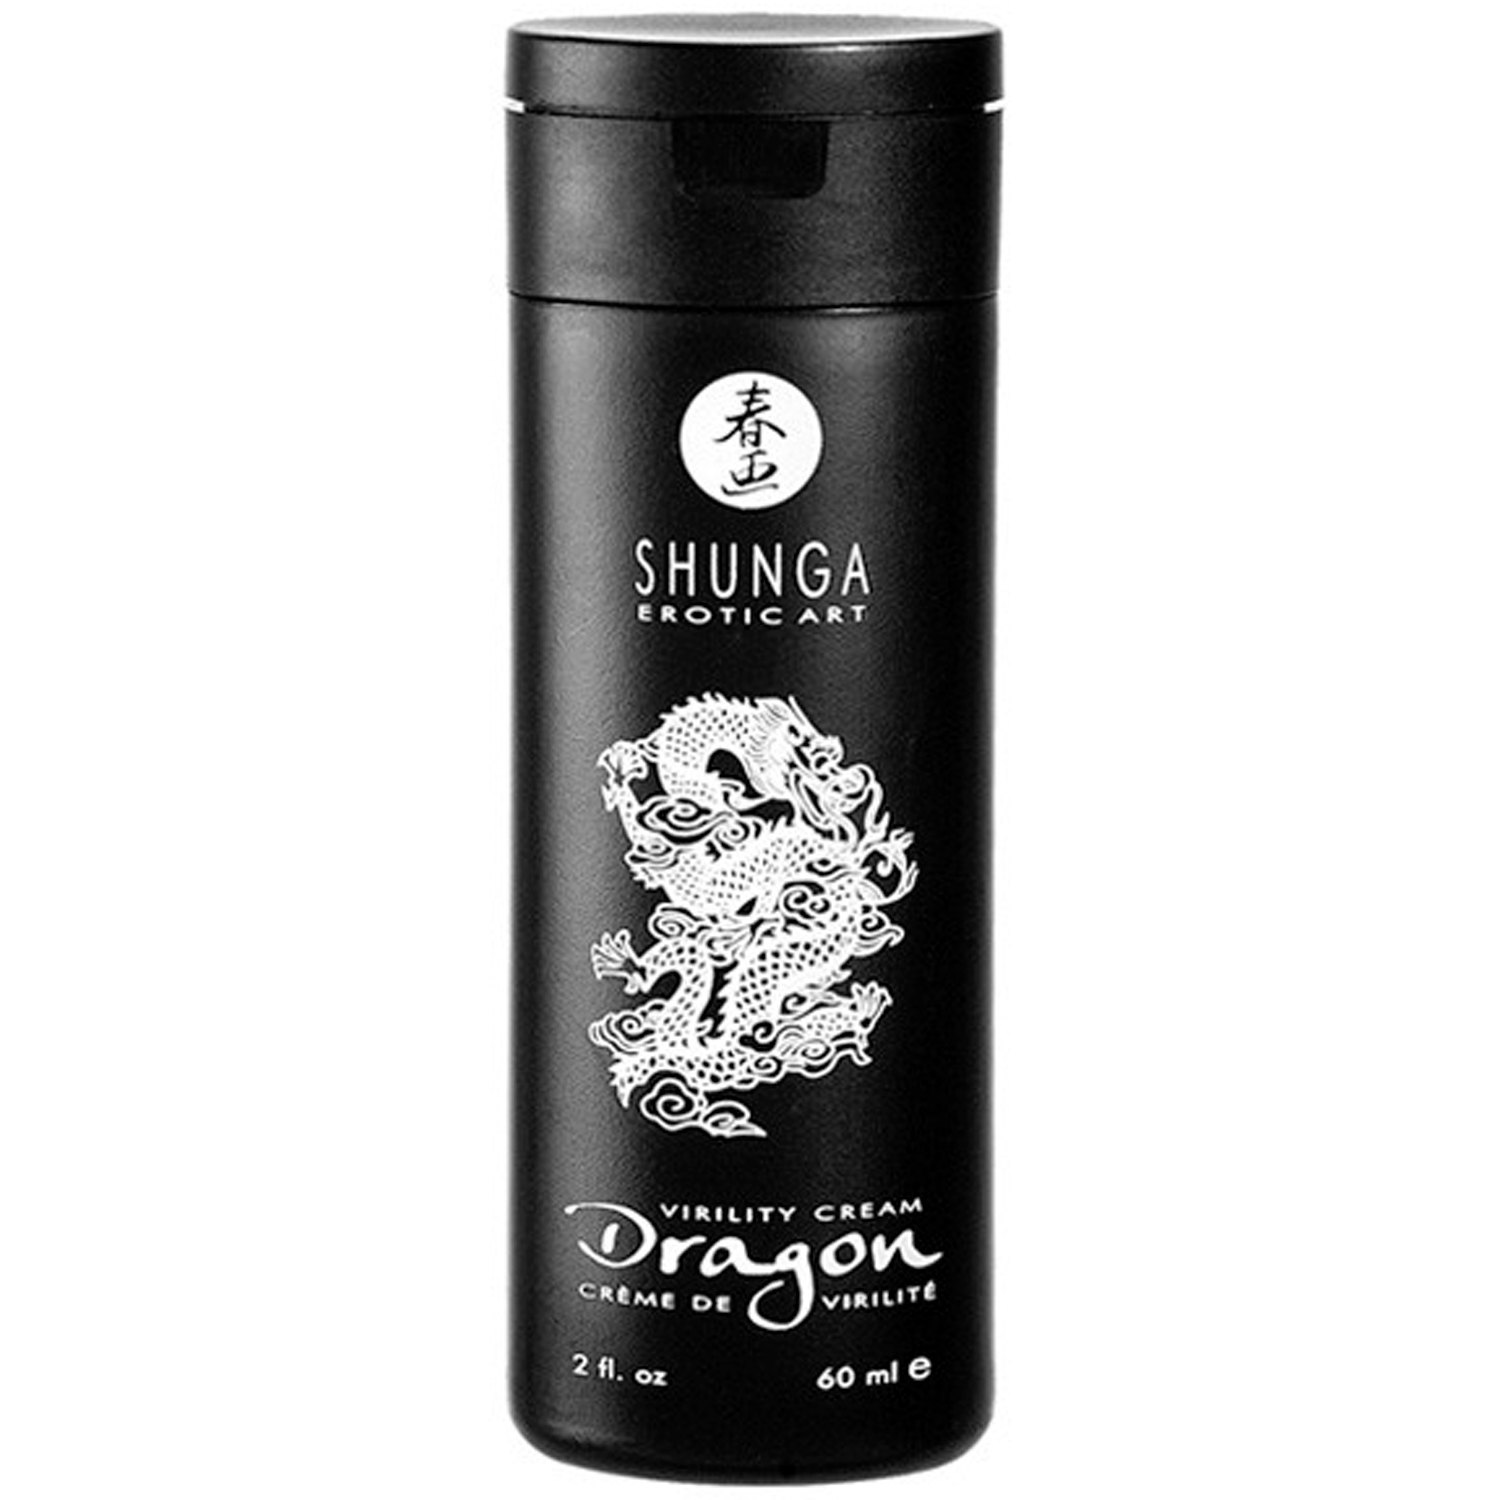 Shunga Dragon Stimulerande Fördröjningskräm 60 ml - Shunga Erotic Art